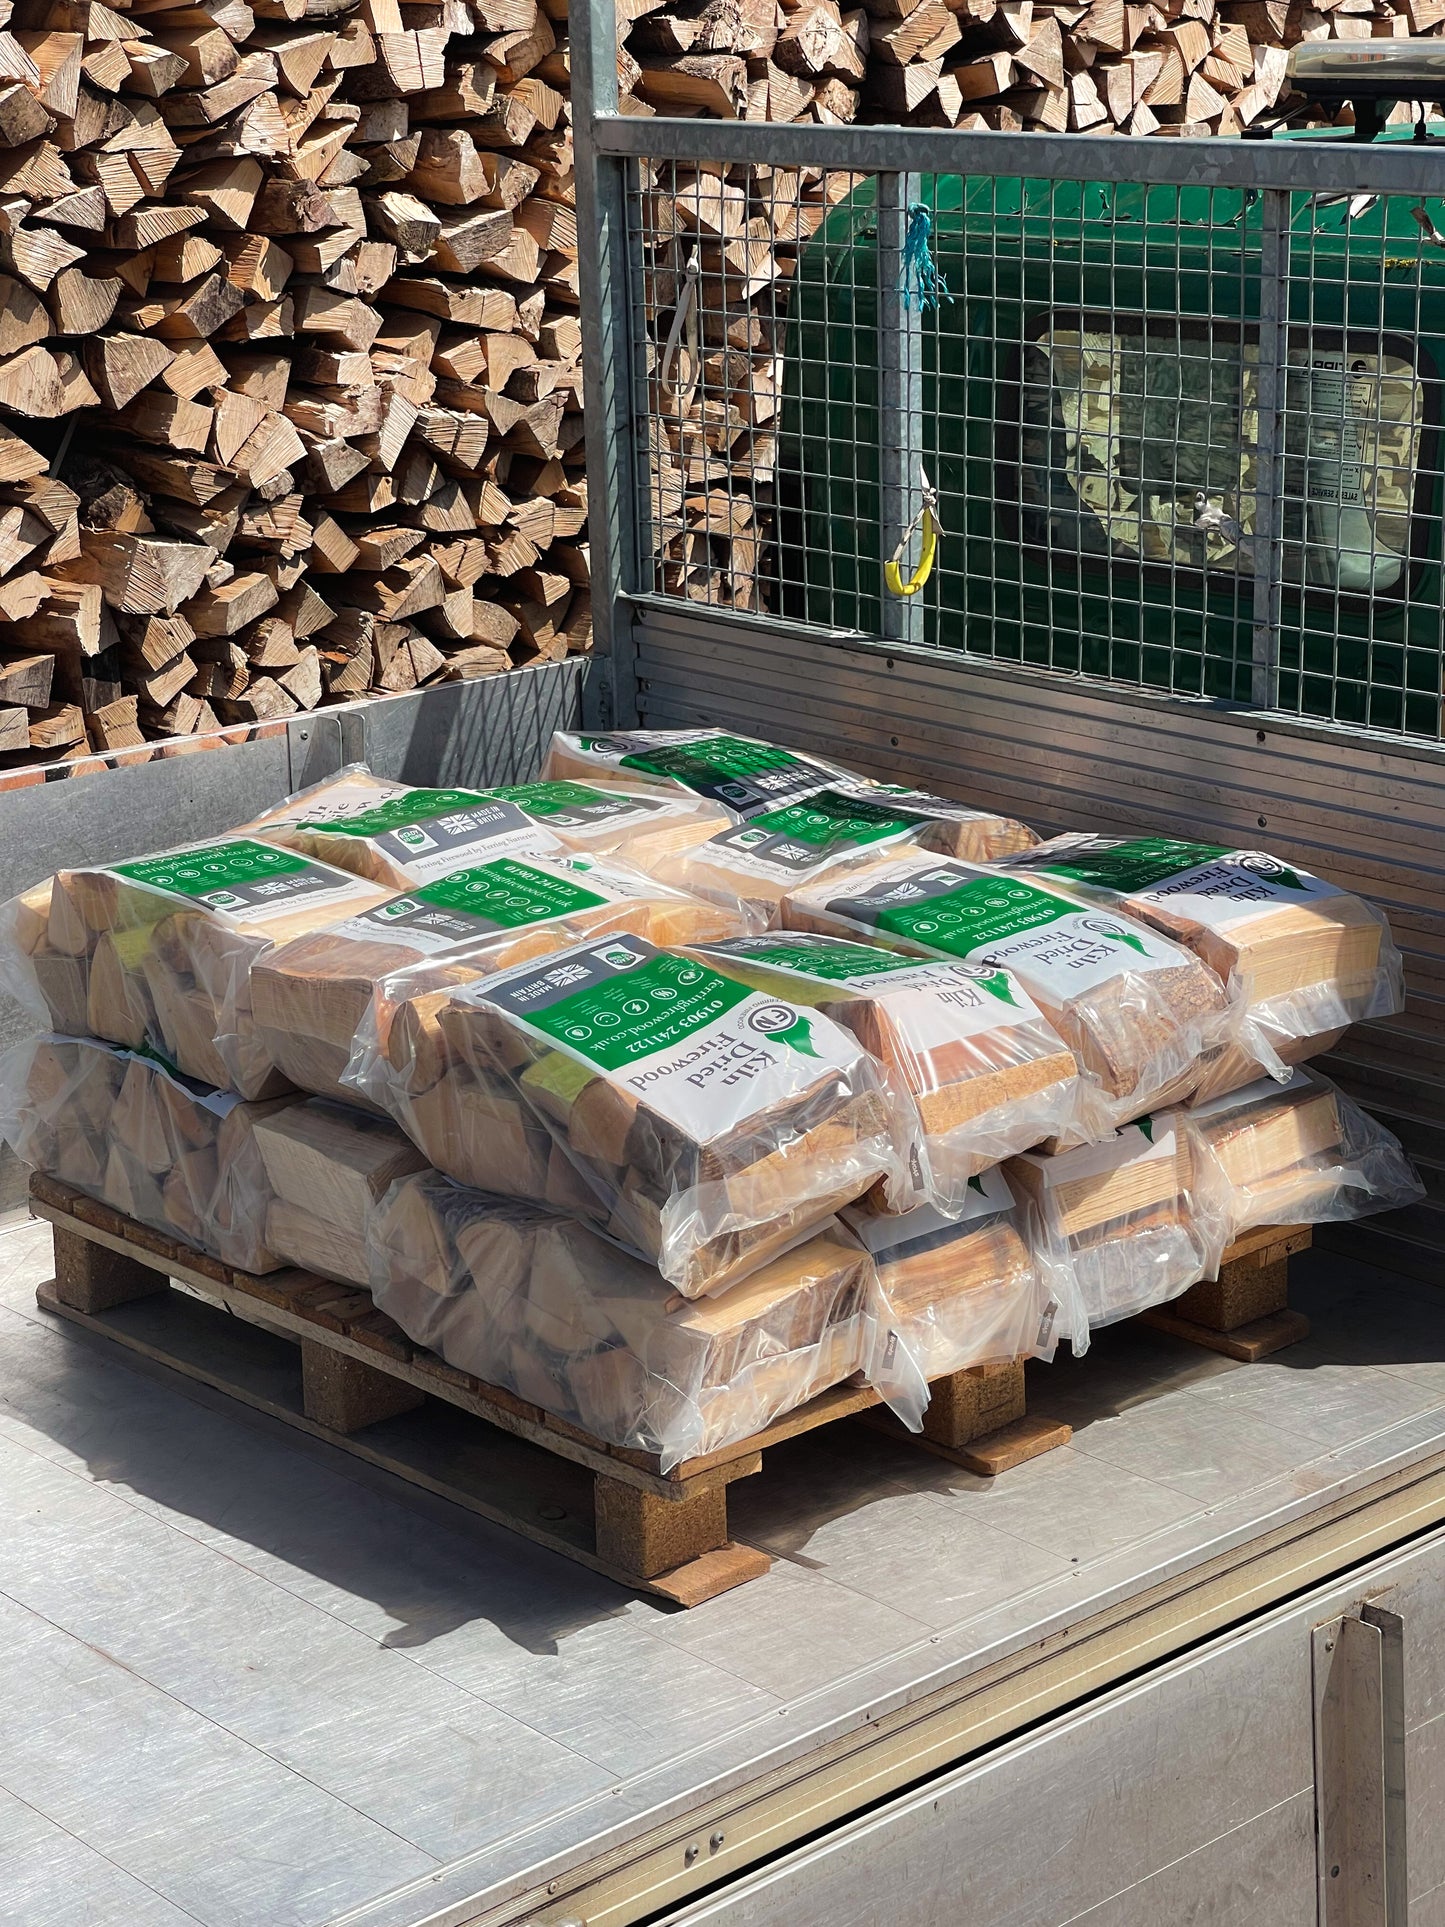 Kiln Dried Firewood Bags (20-Bags)